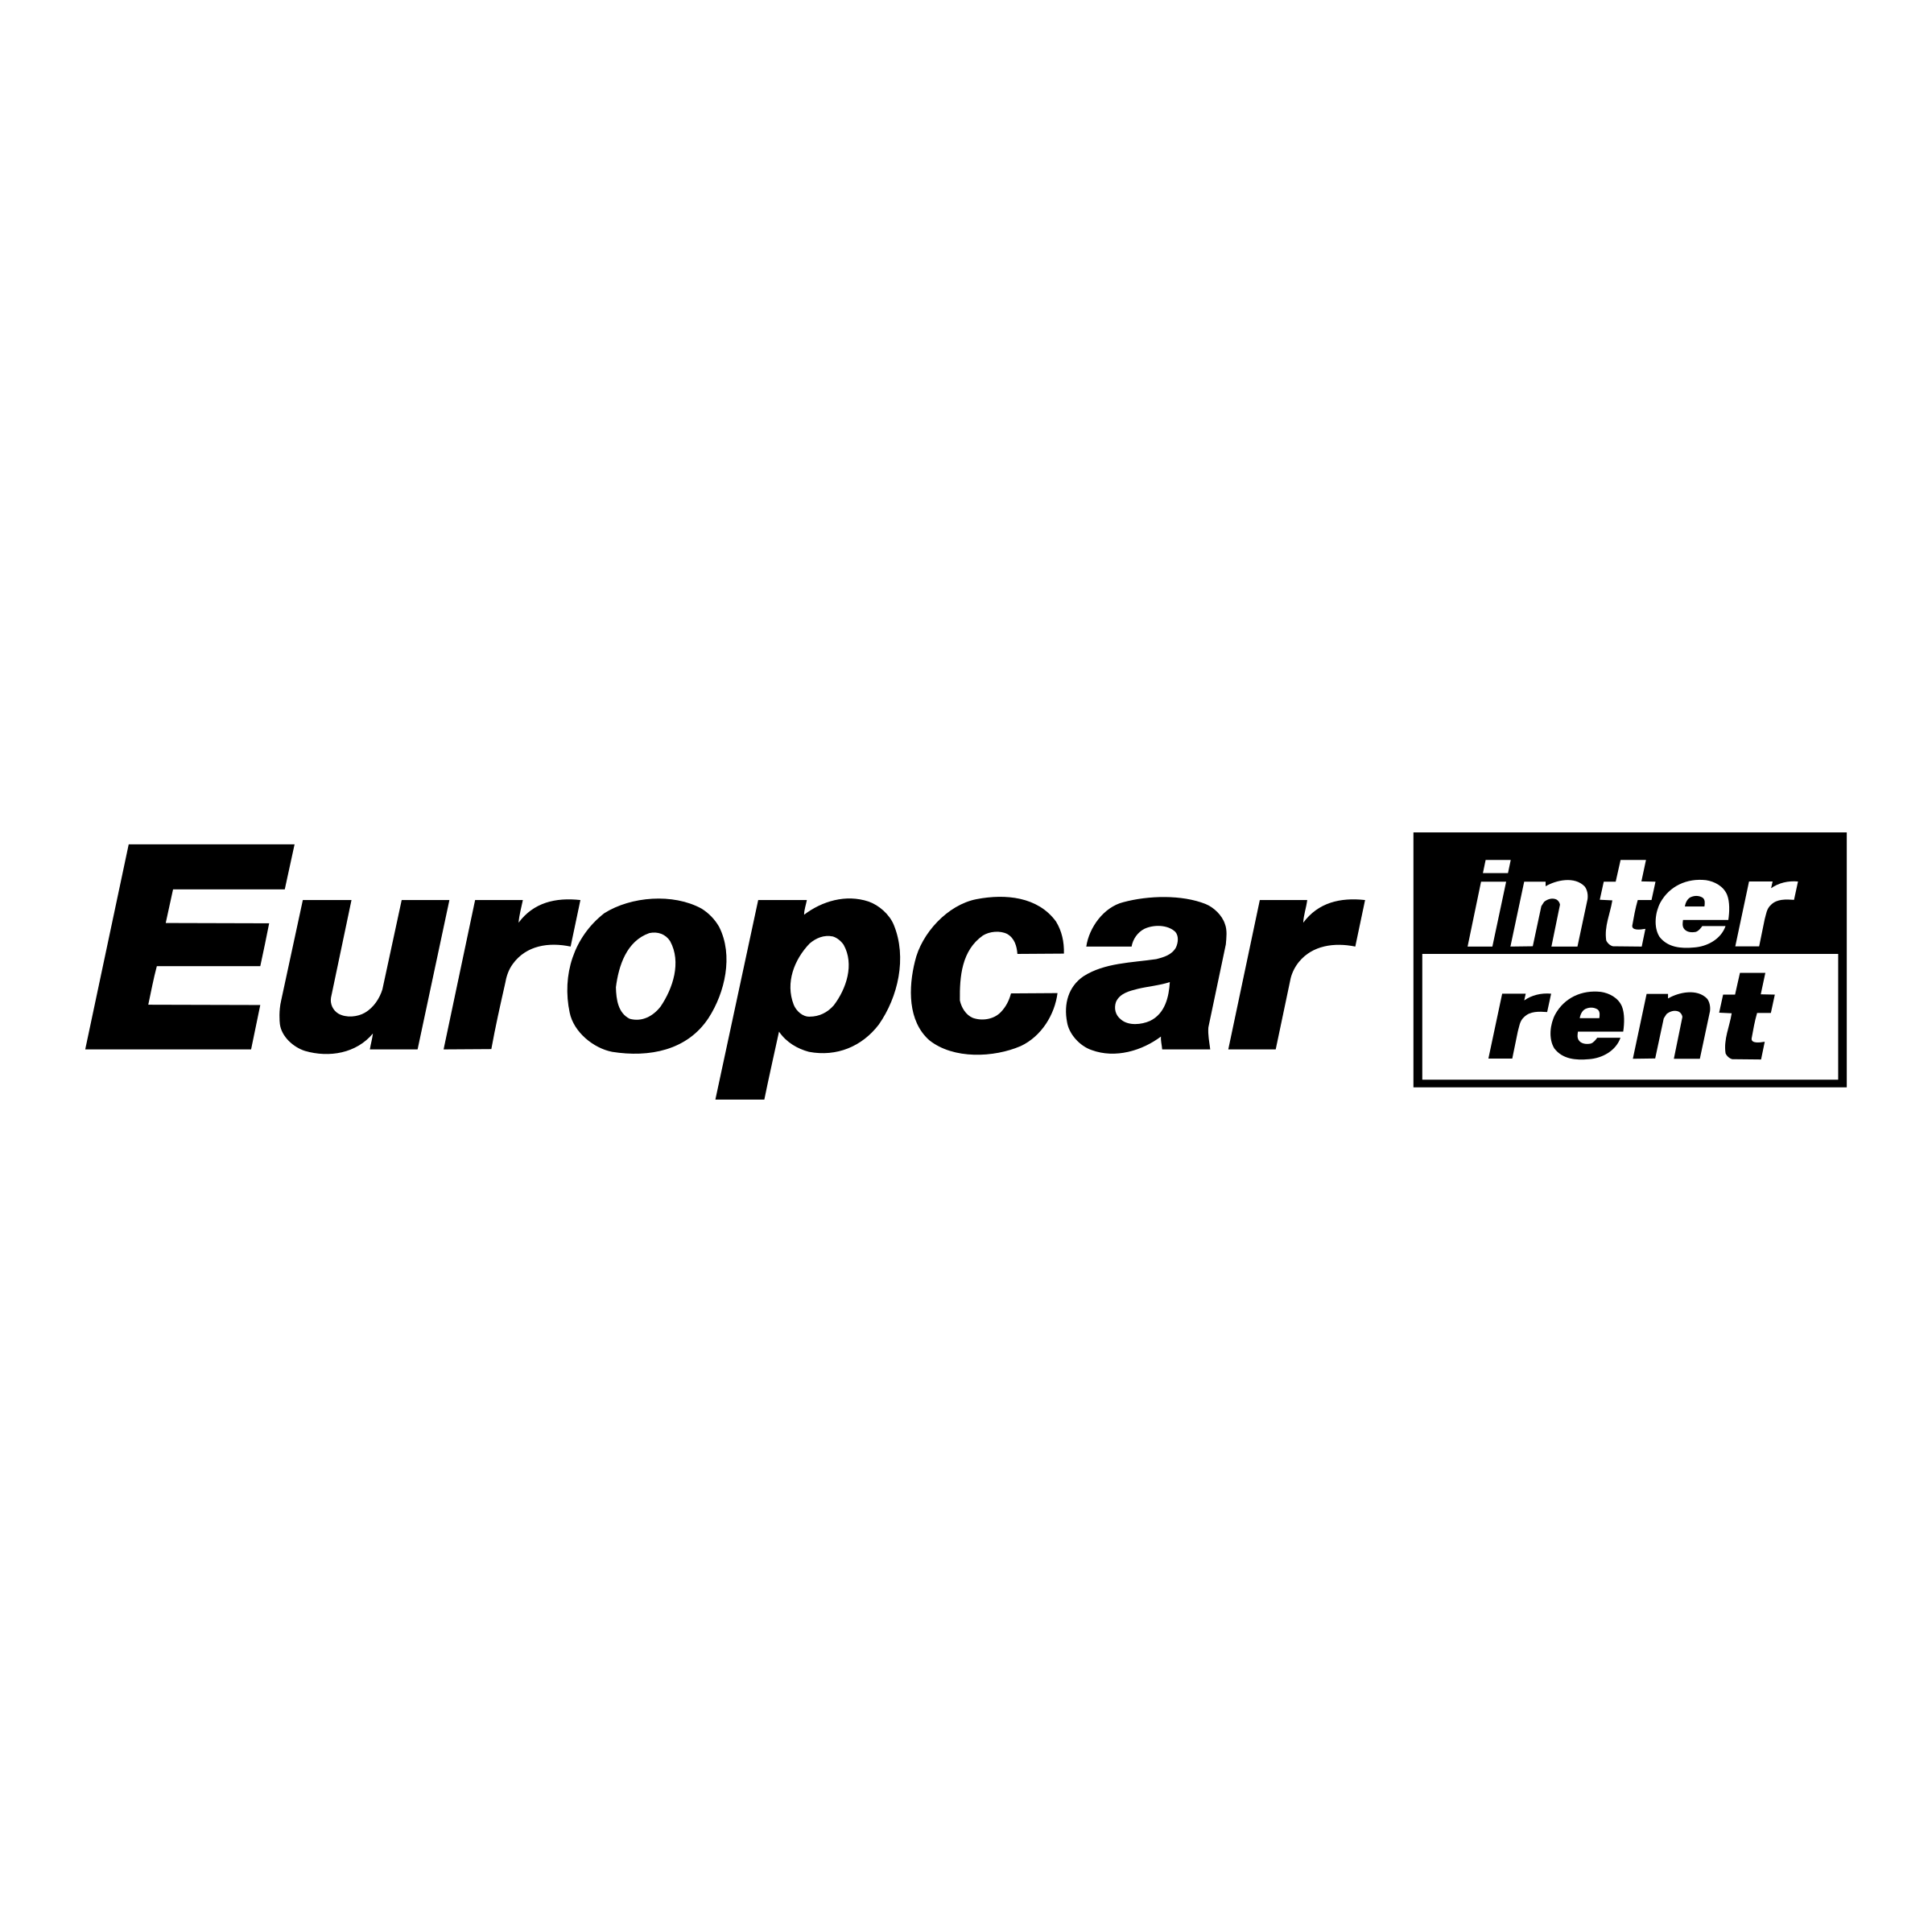 Europcar Logo - Europcar Logo PNG Transparent & SVG Vector - Freebie Supply